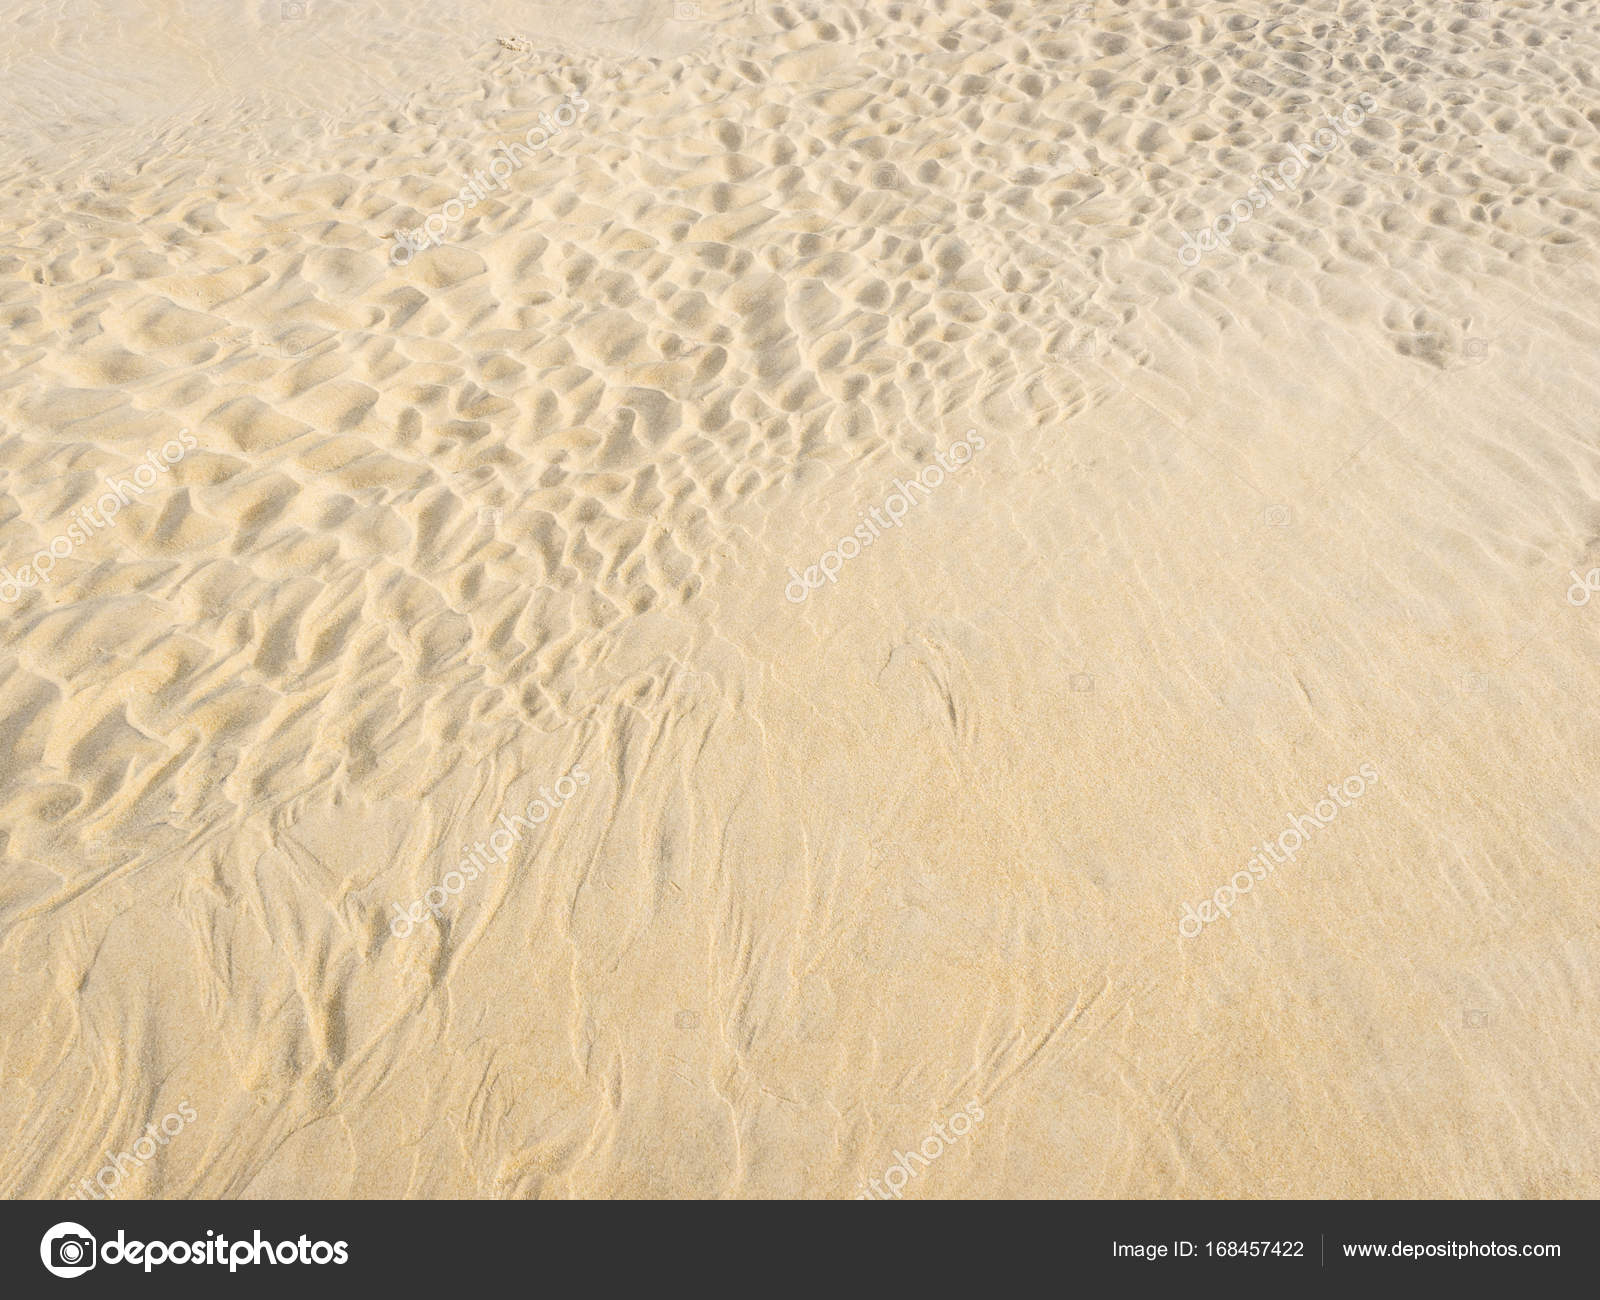 Feinen Sand Textur Hintergrund Stockfotografie Lizenzfreie Fotos C Pnichaya15 Depositphotos